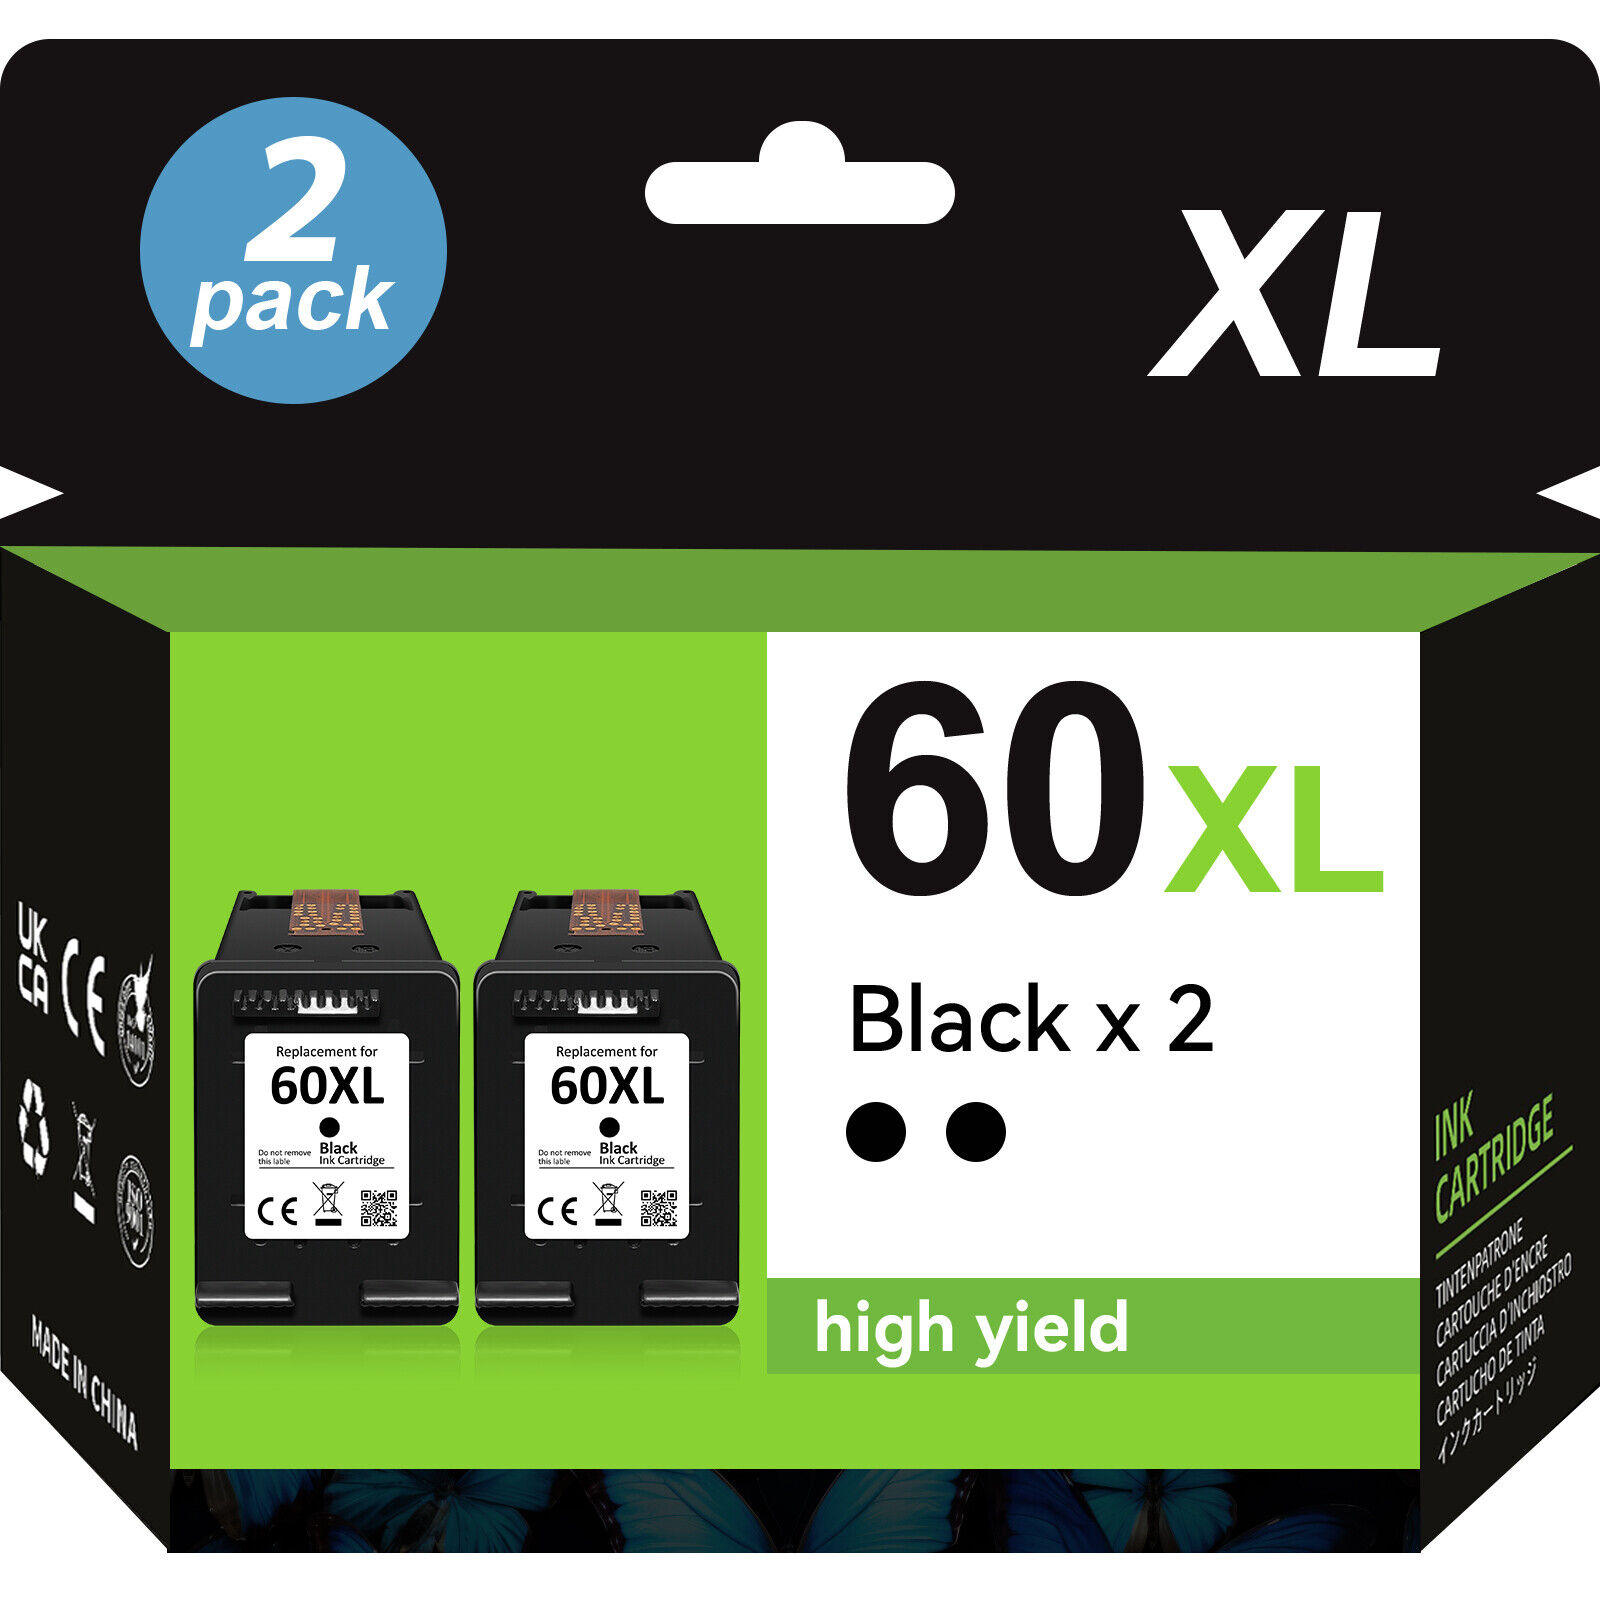 2 PK 60 XL Black Ink Cartridges CC641 For HP 60XL D2680 D1660 D2530 ENVY 100 110